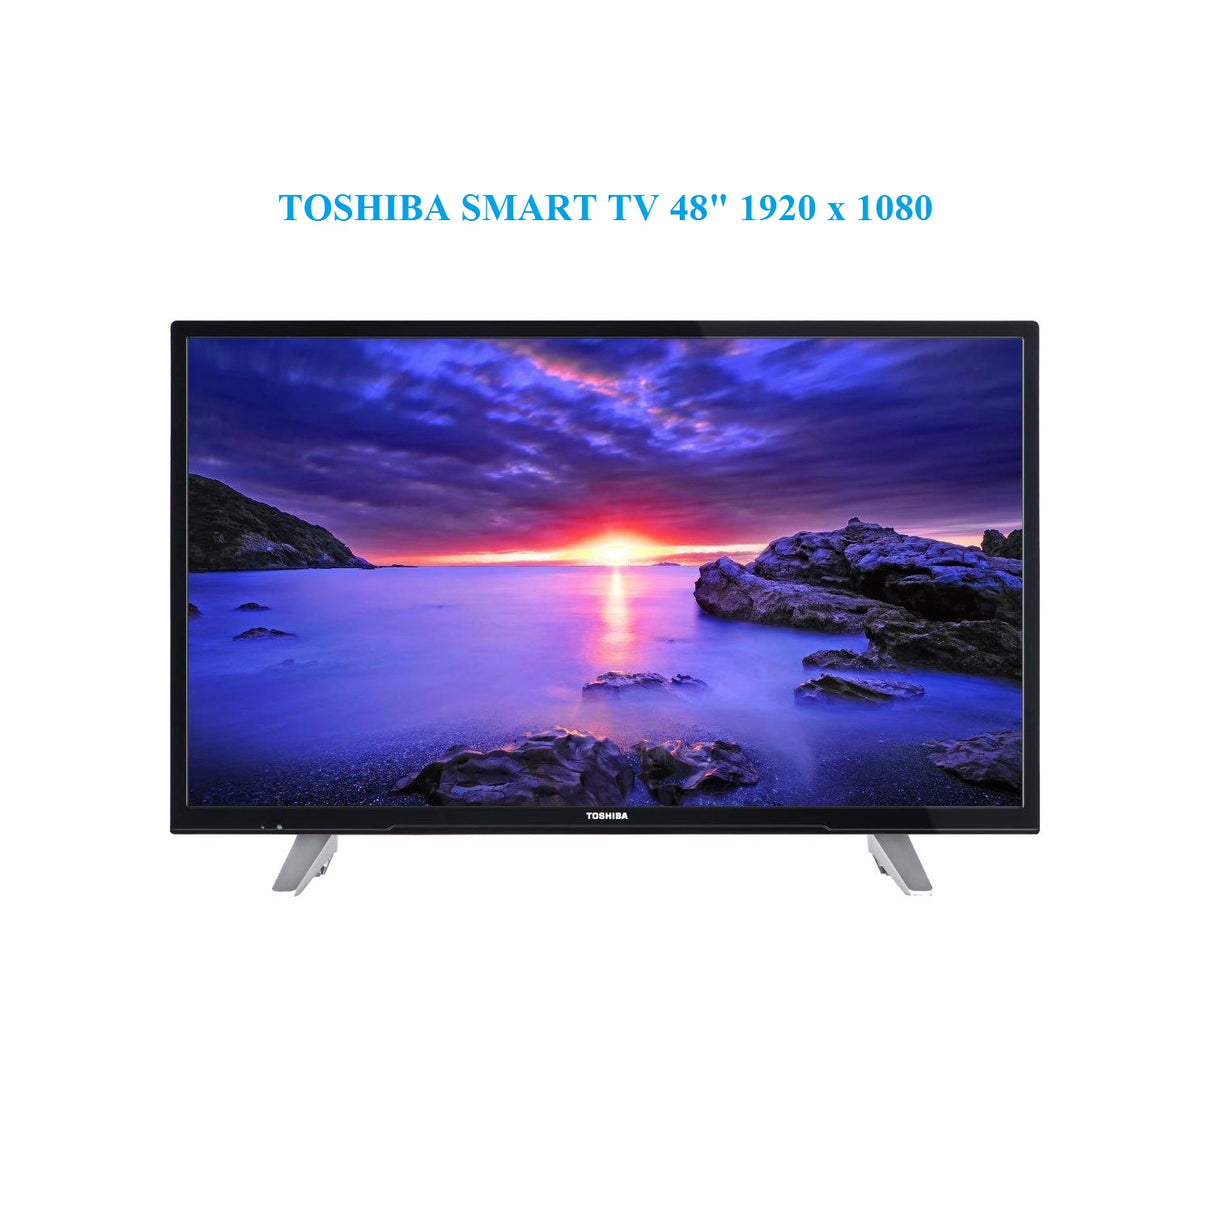 Toshiba Smart TV 48L3663DG 48 1920 x 1080 Led Backlight TV